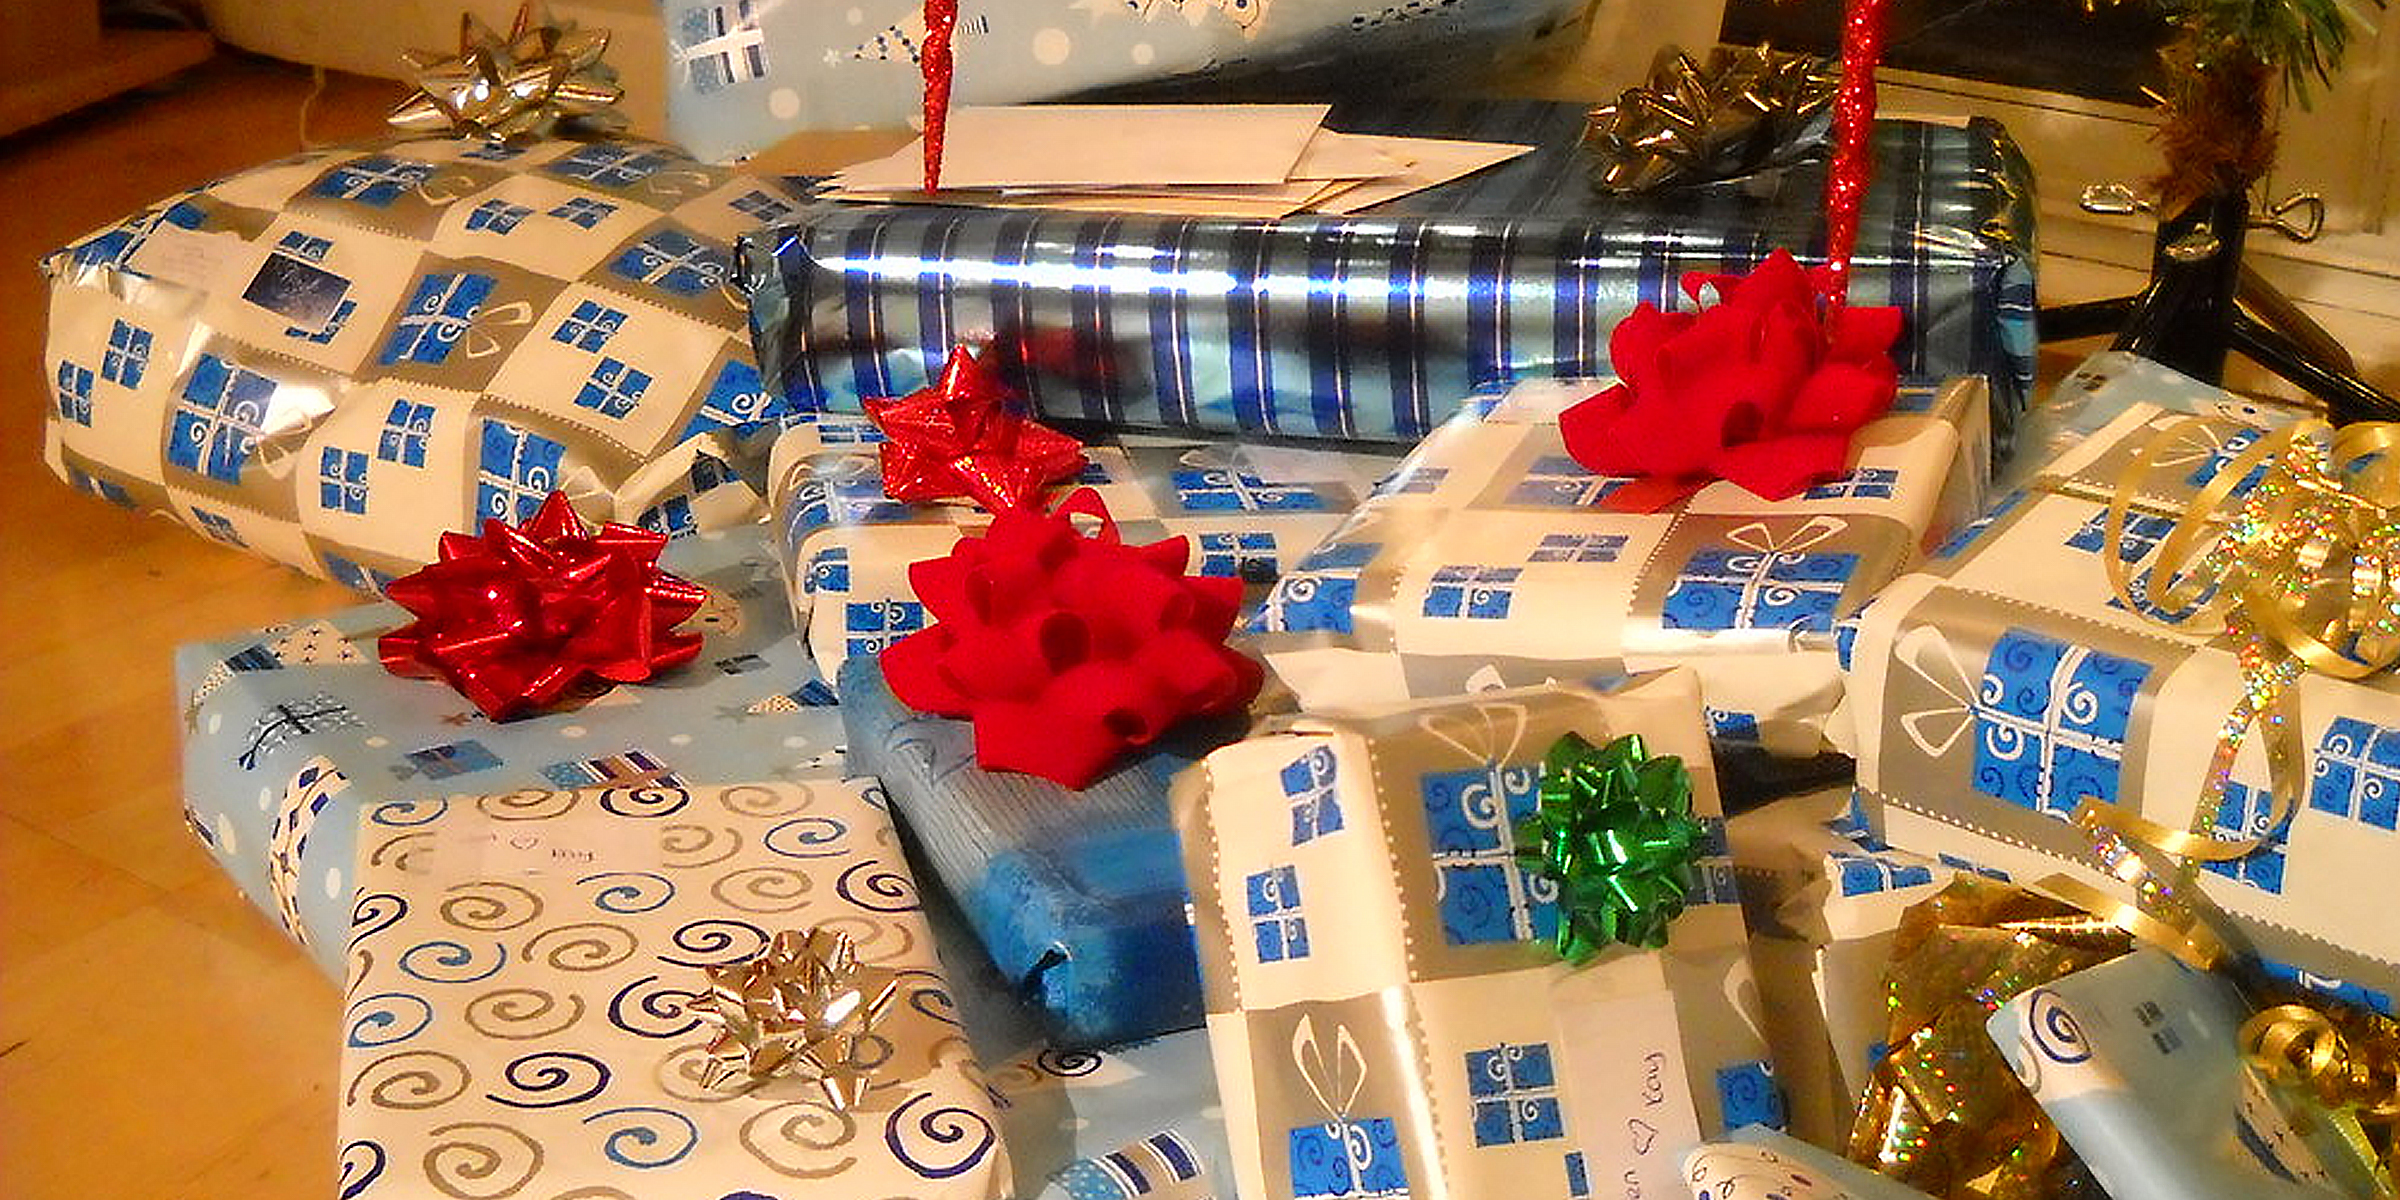 Cadeaux de Noël soigneusement emballés | Source : Flickr.com/www.metaphoricalplatypus.com/CC BY 2.0